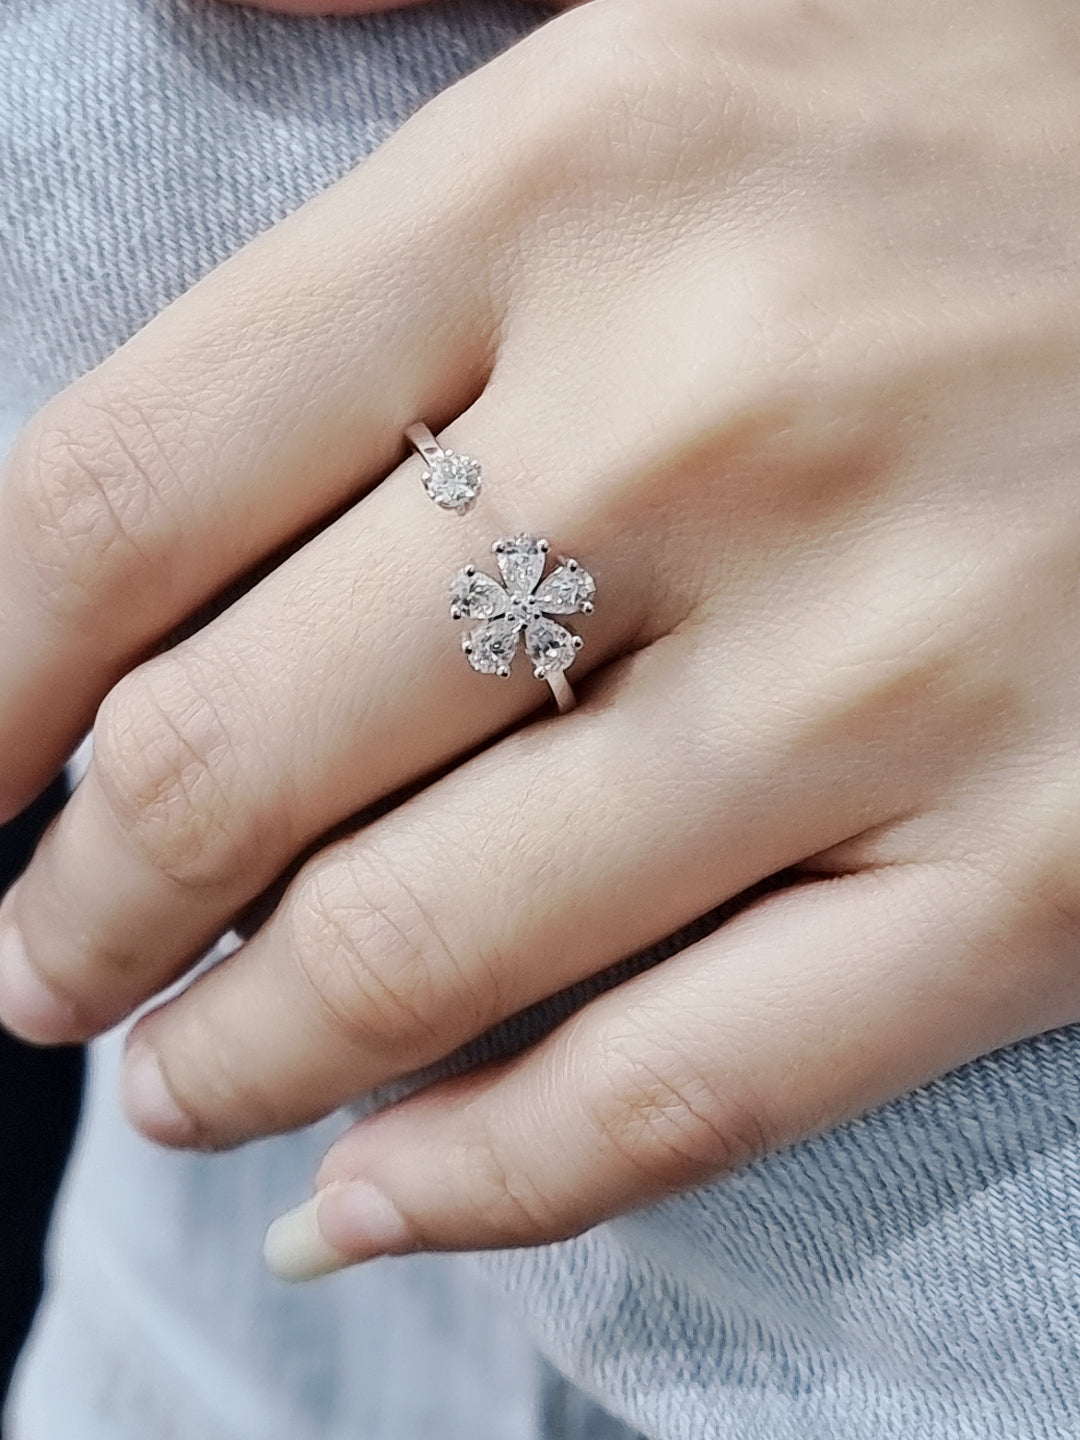 Open Cuff Flower Shape Diamond Ring In 18k White Gold.